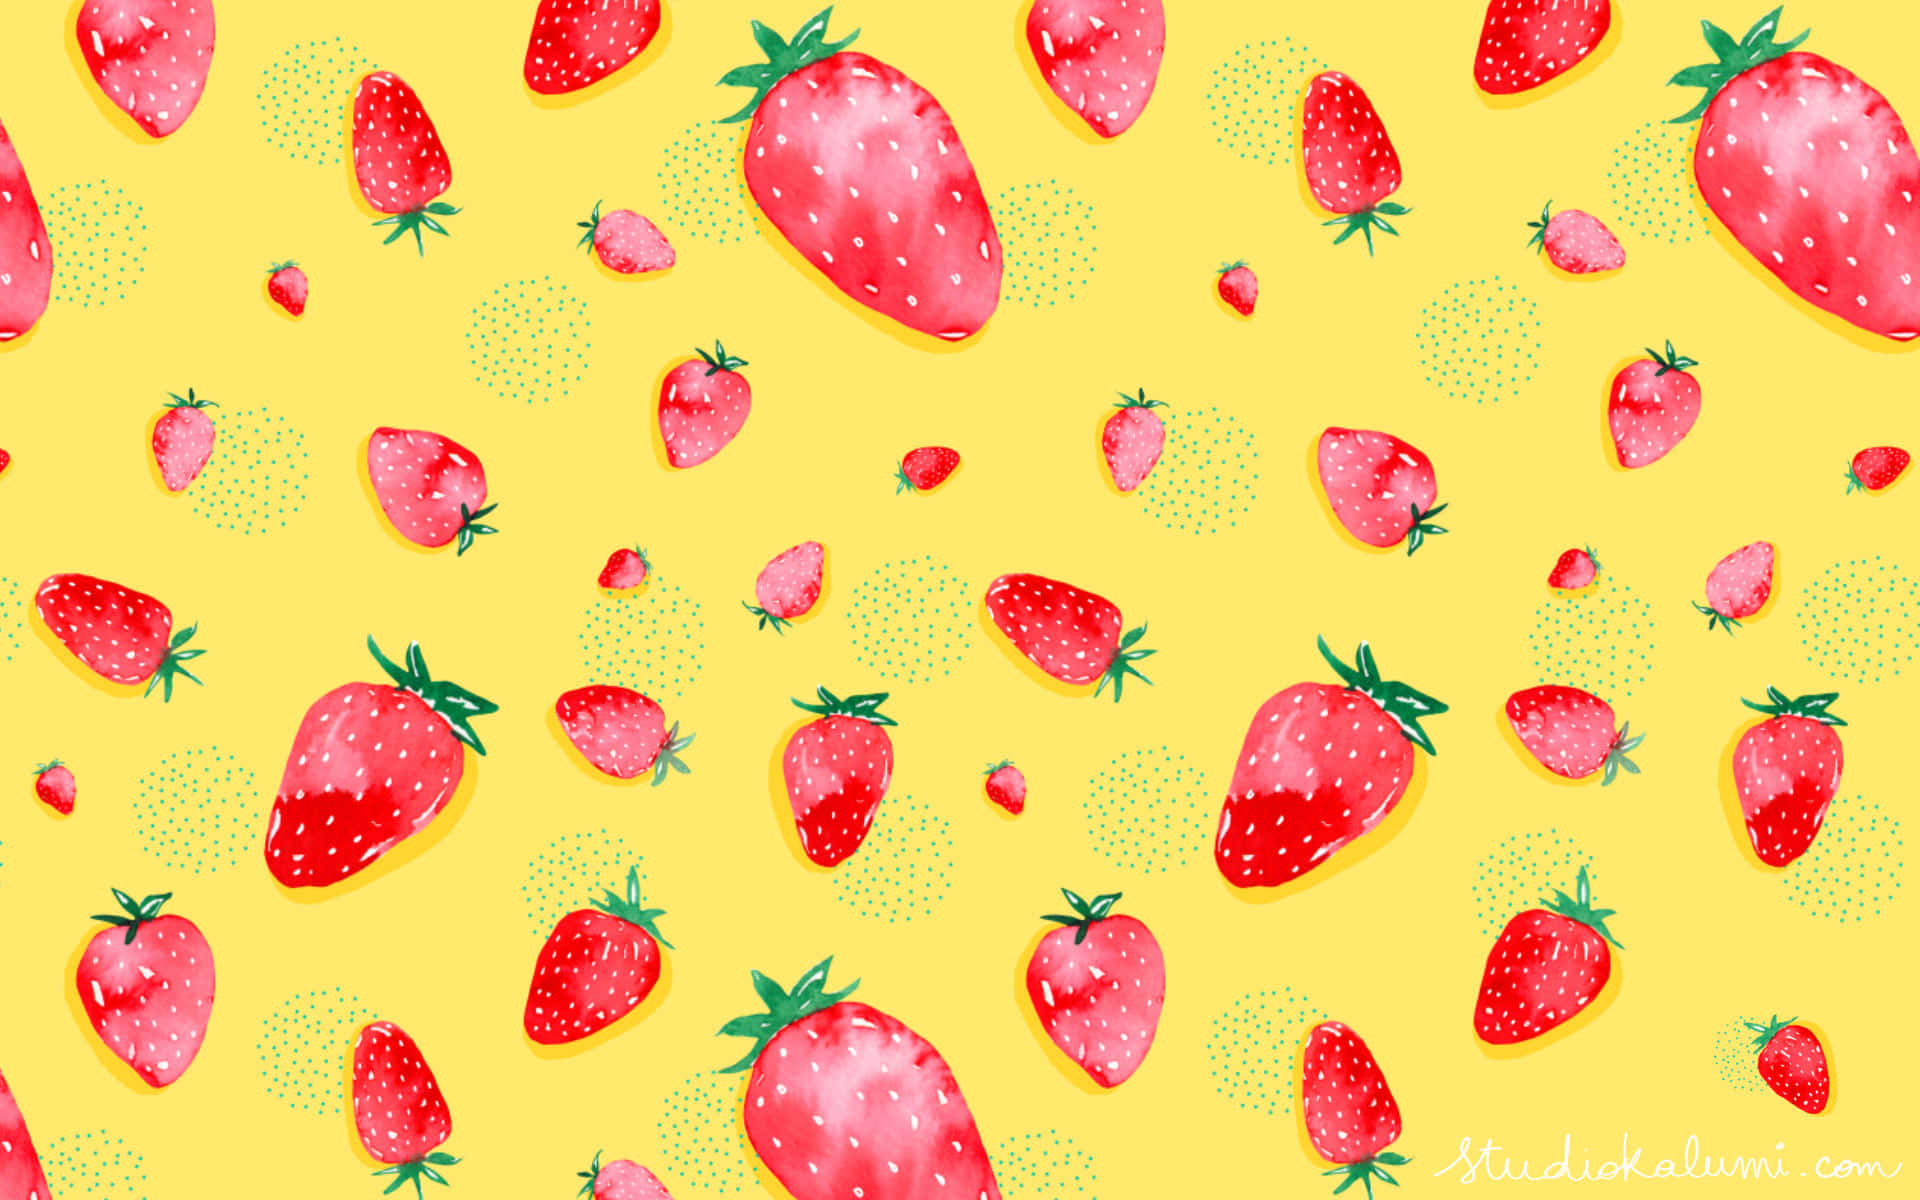 Strawberry Wallpaper - Hd Wallpapers